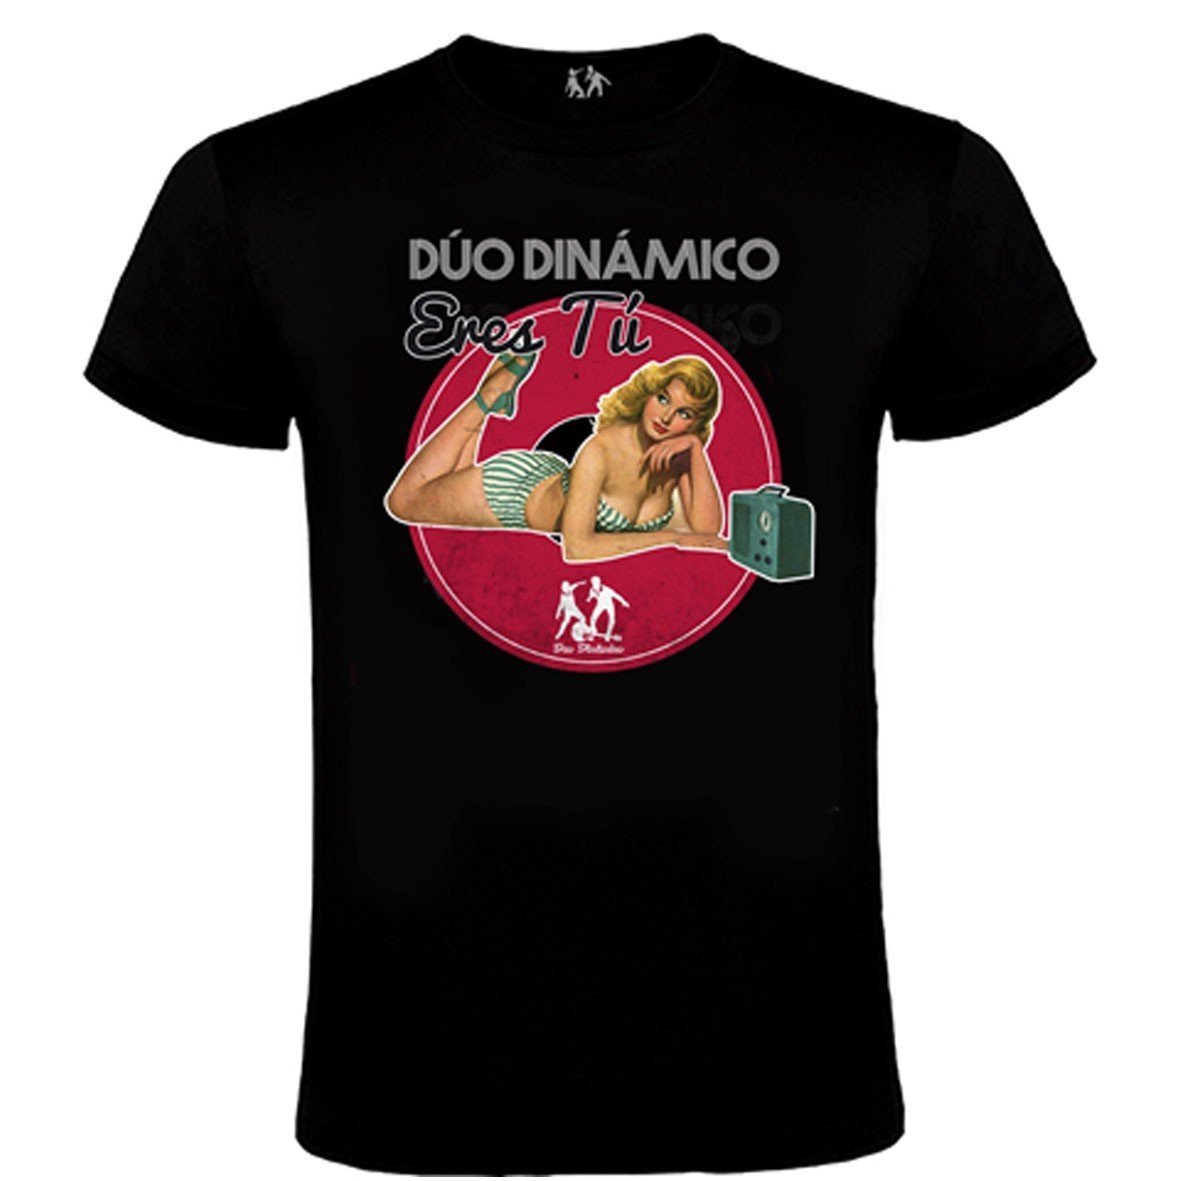 El Dúo Dinámico - Camiseta chico "Eres tú" - D2fy · Rocktud - Duo Dinámico